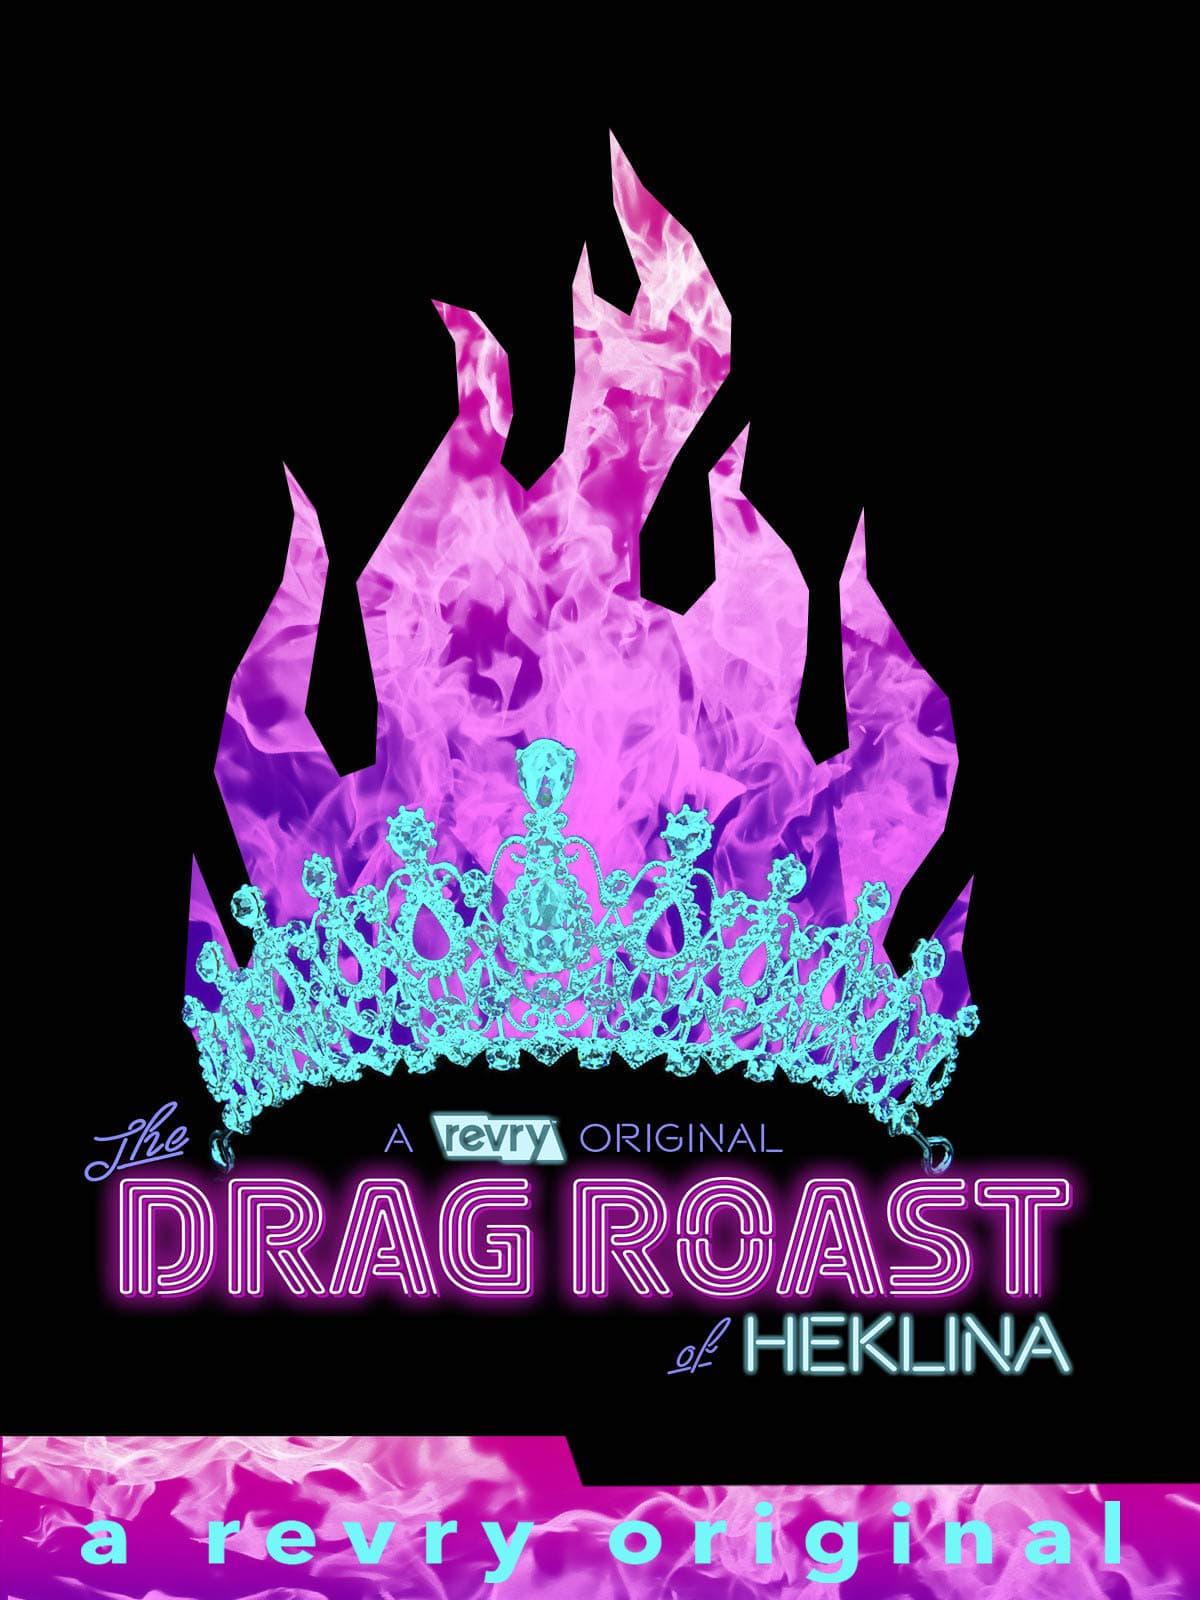 The Drag Roast of Heklina poster